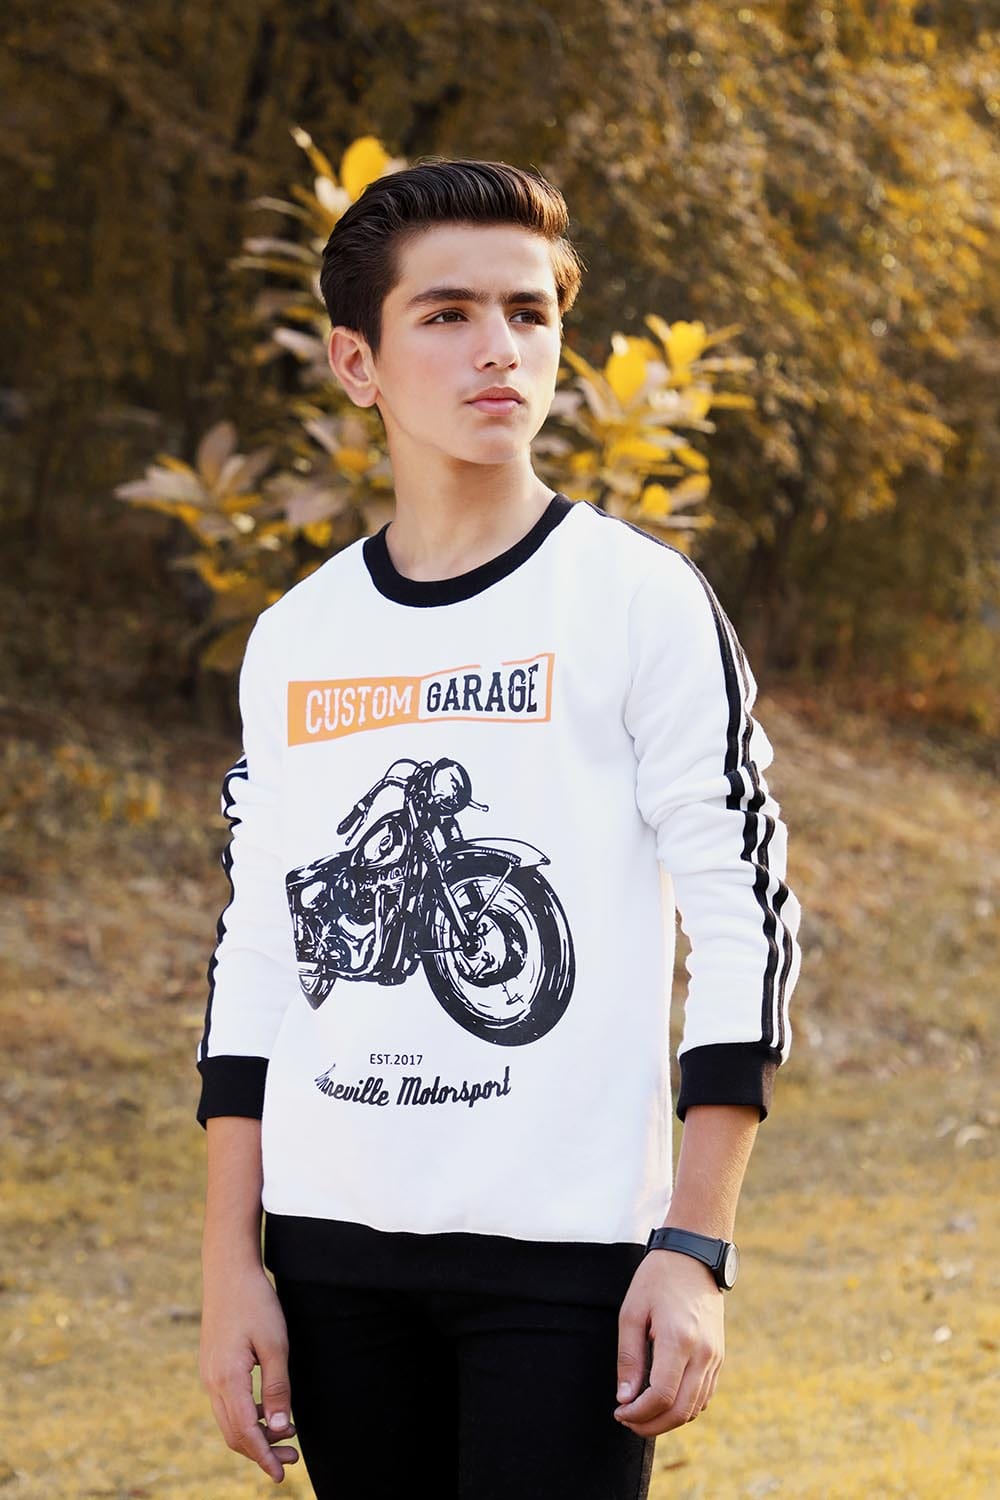 Hope Not Out by Shahid Afridi Boys Knit Sweat Shirt Biker Sweatshirt